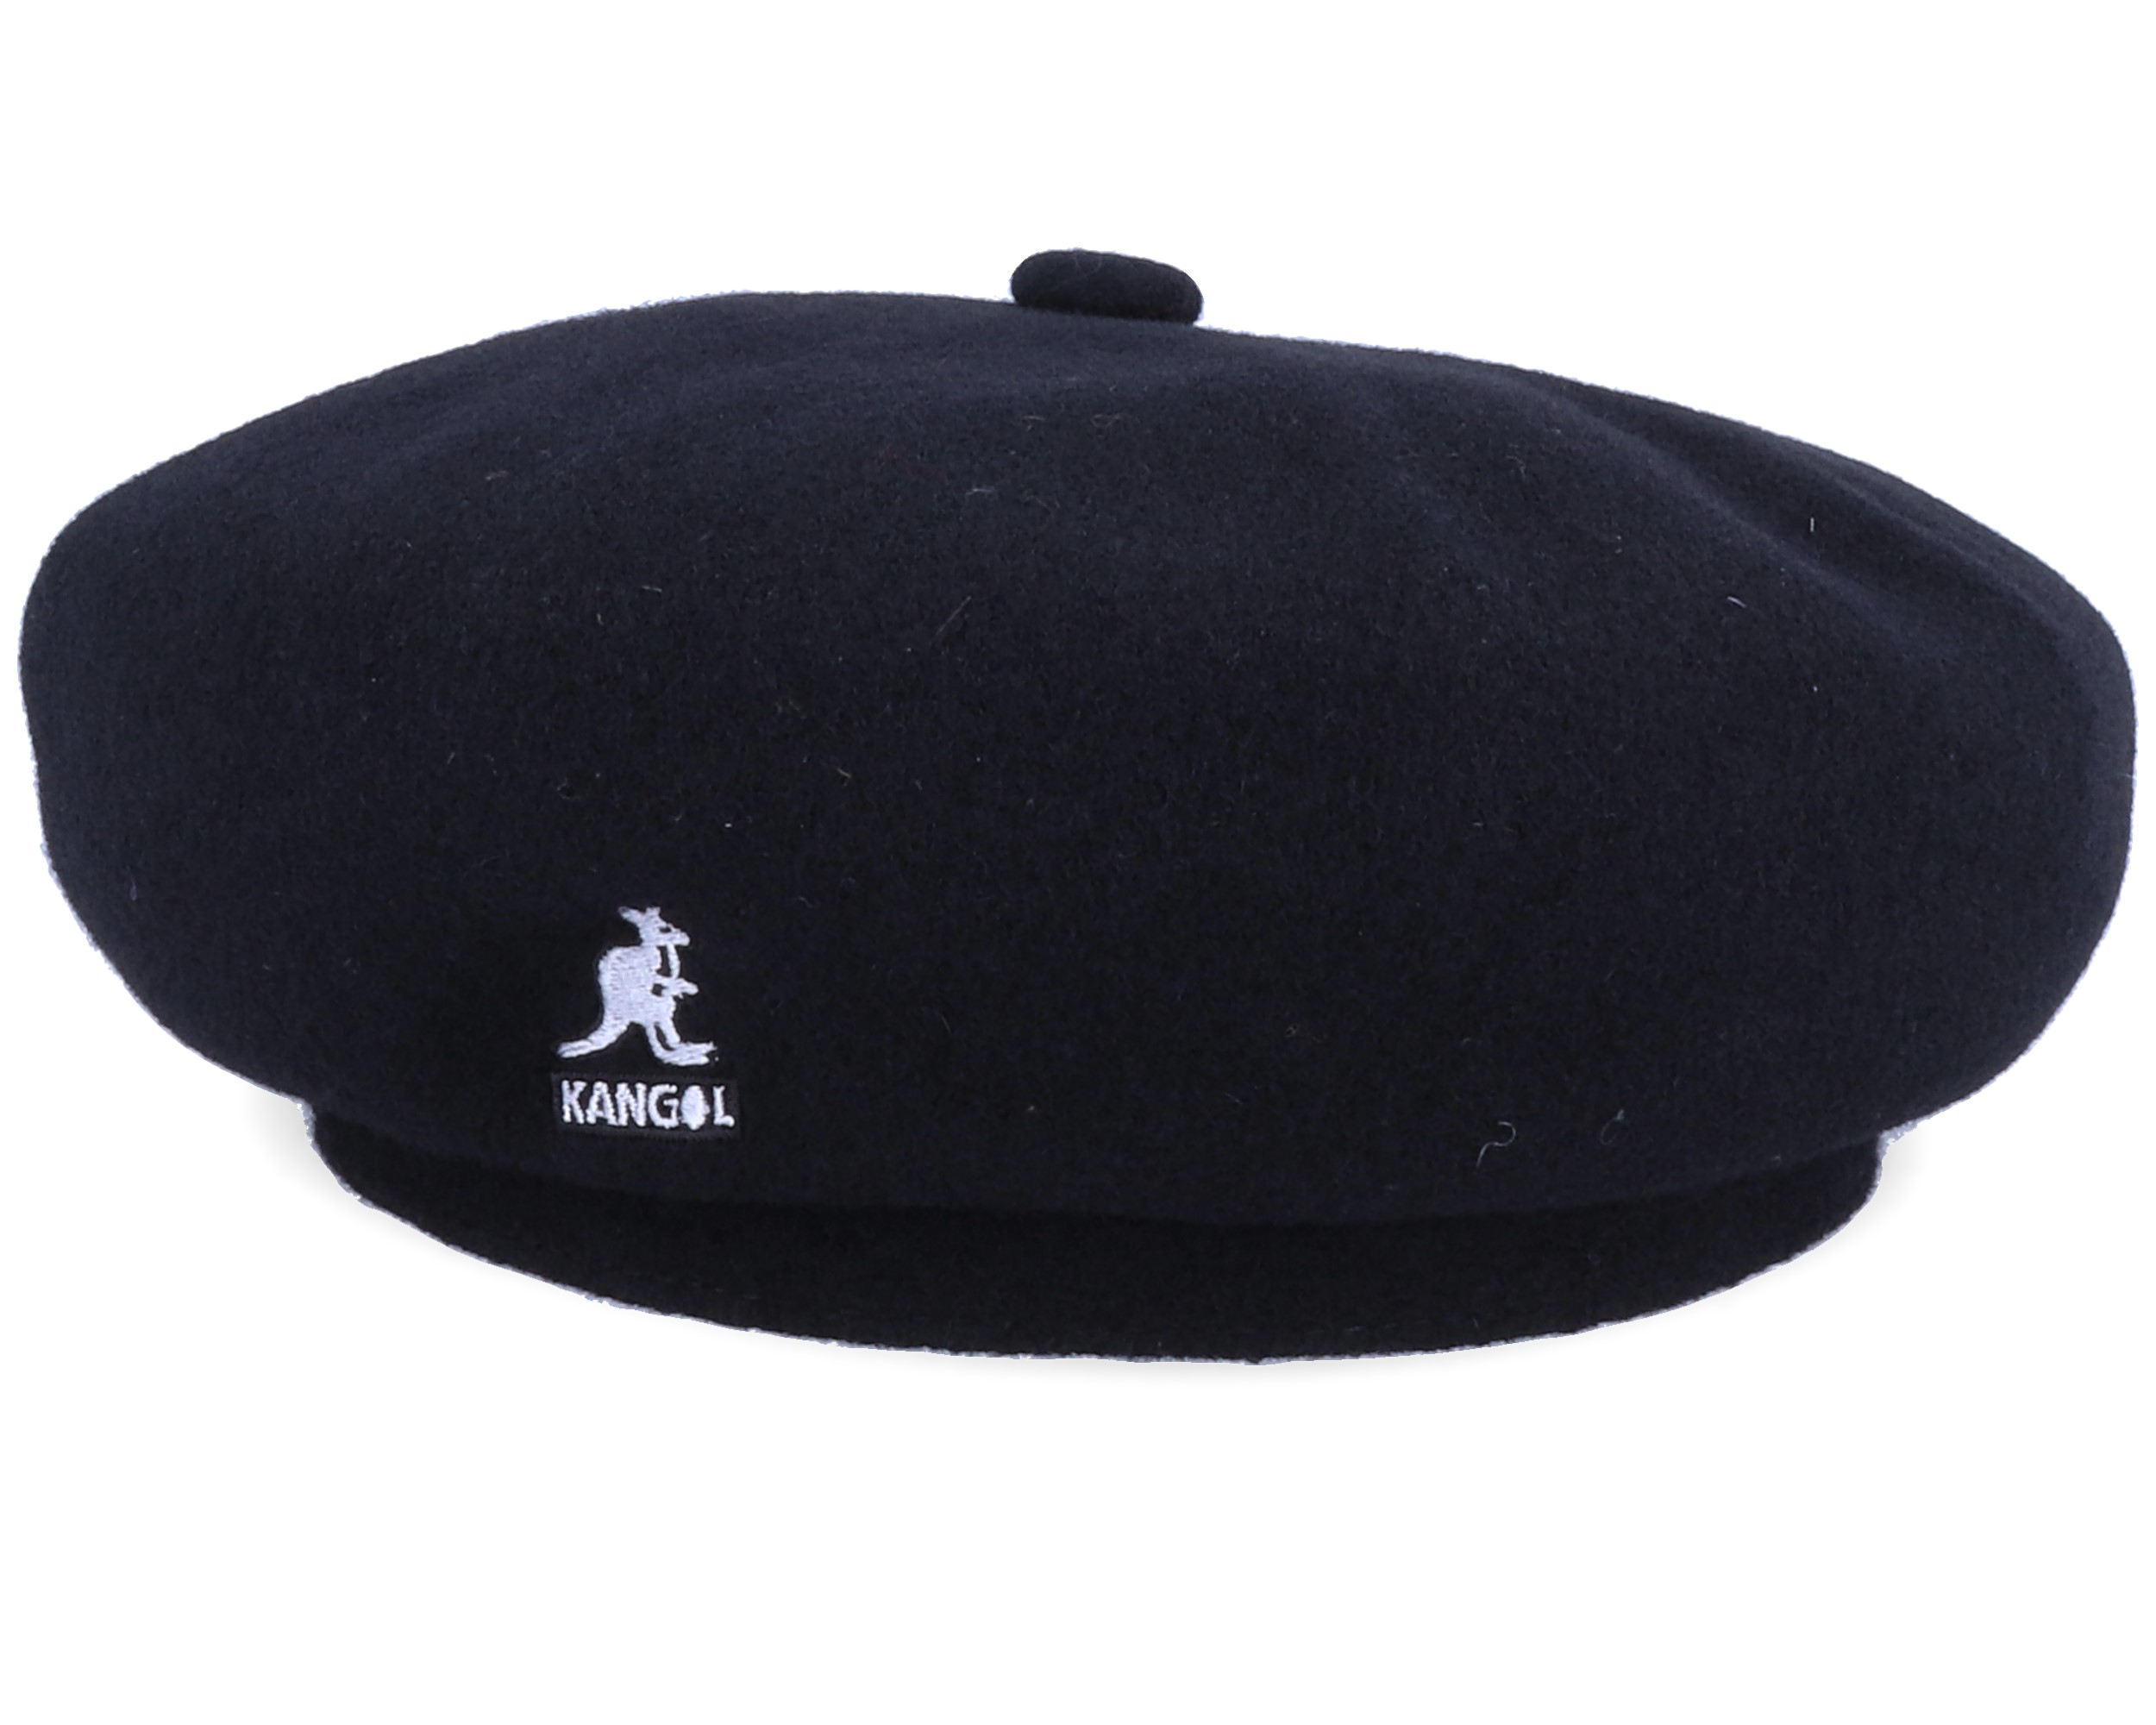 Wool Jax Beret Black Beret - Kangol caps | Hatstore.co.uk